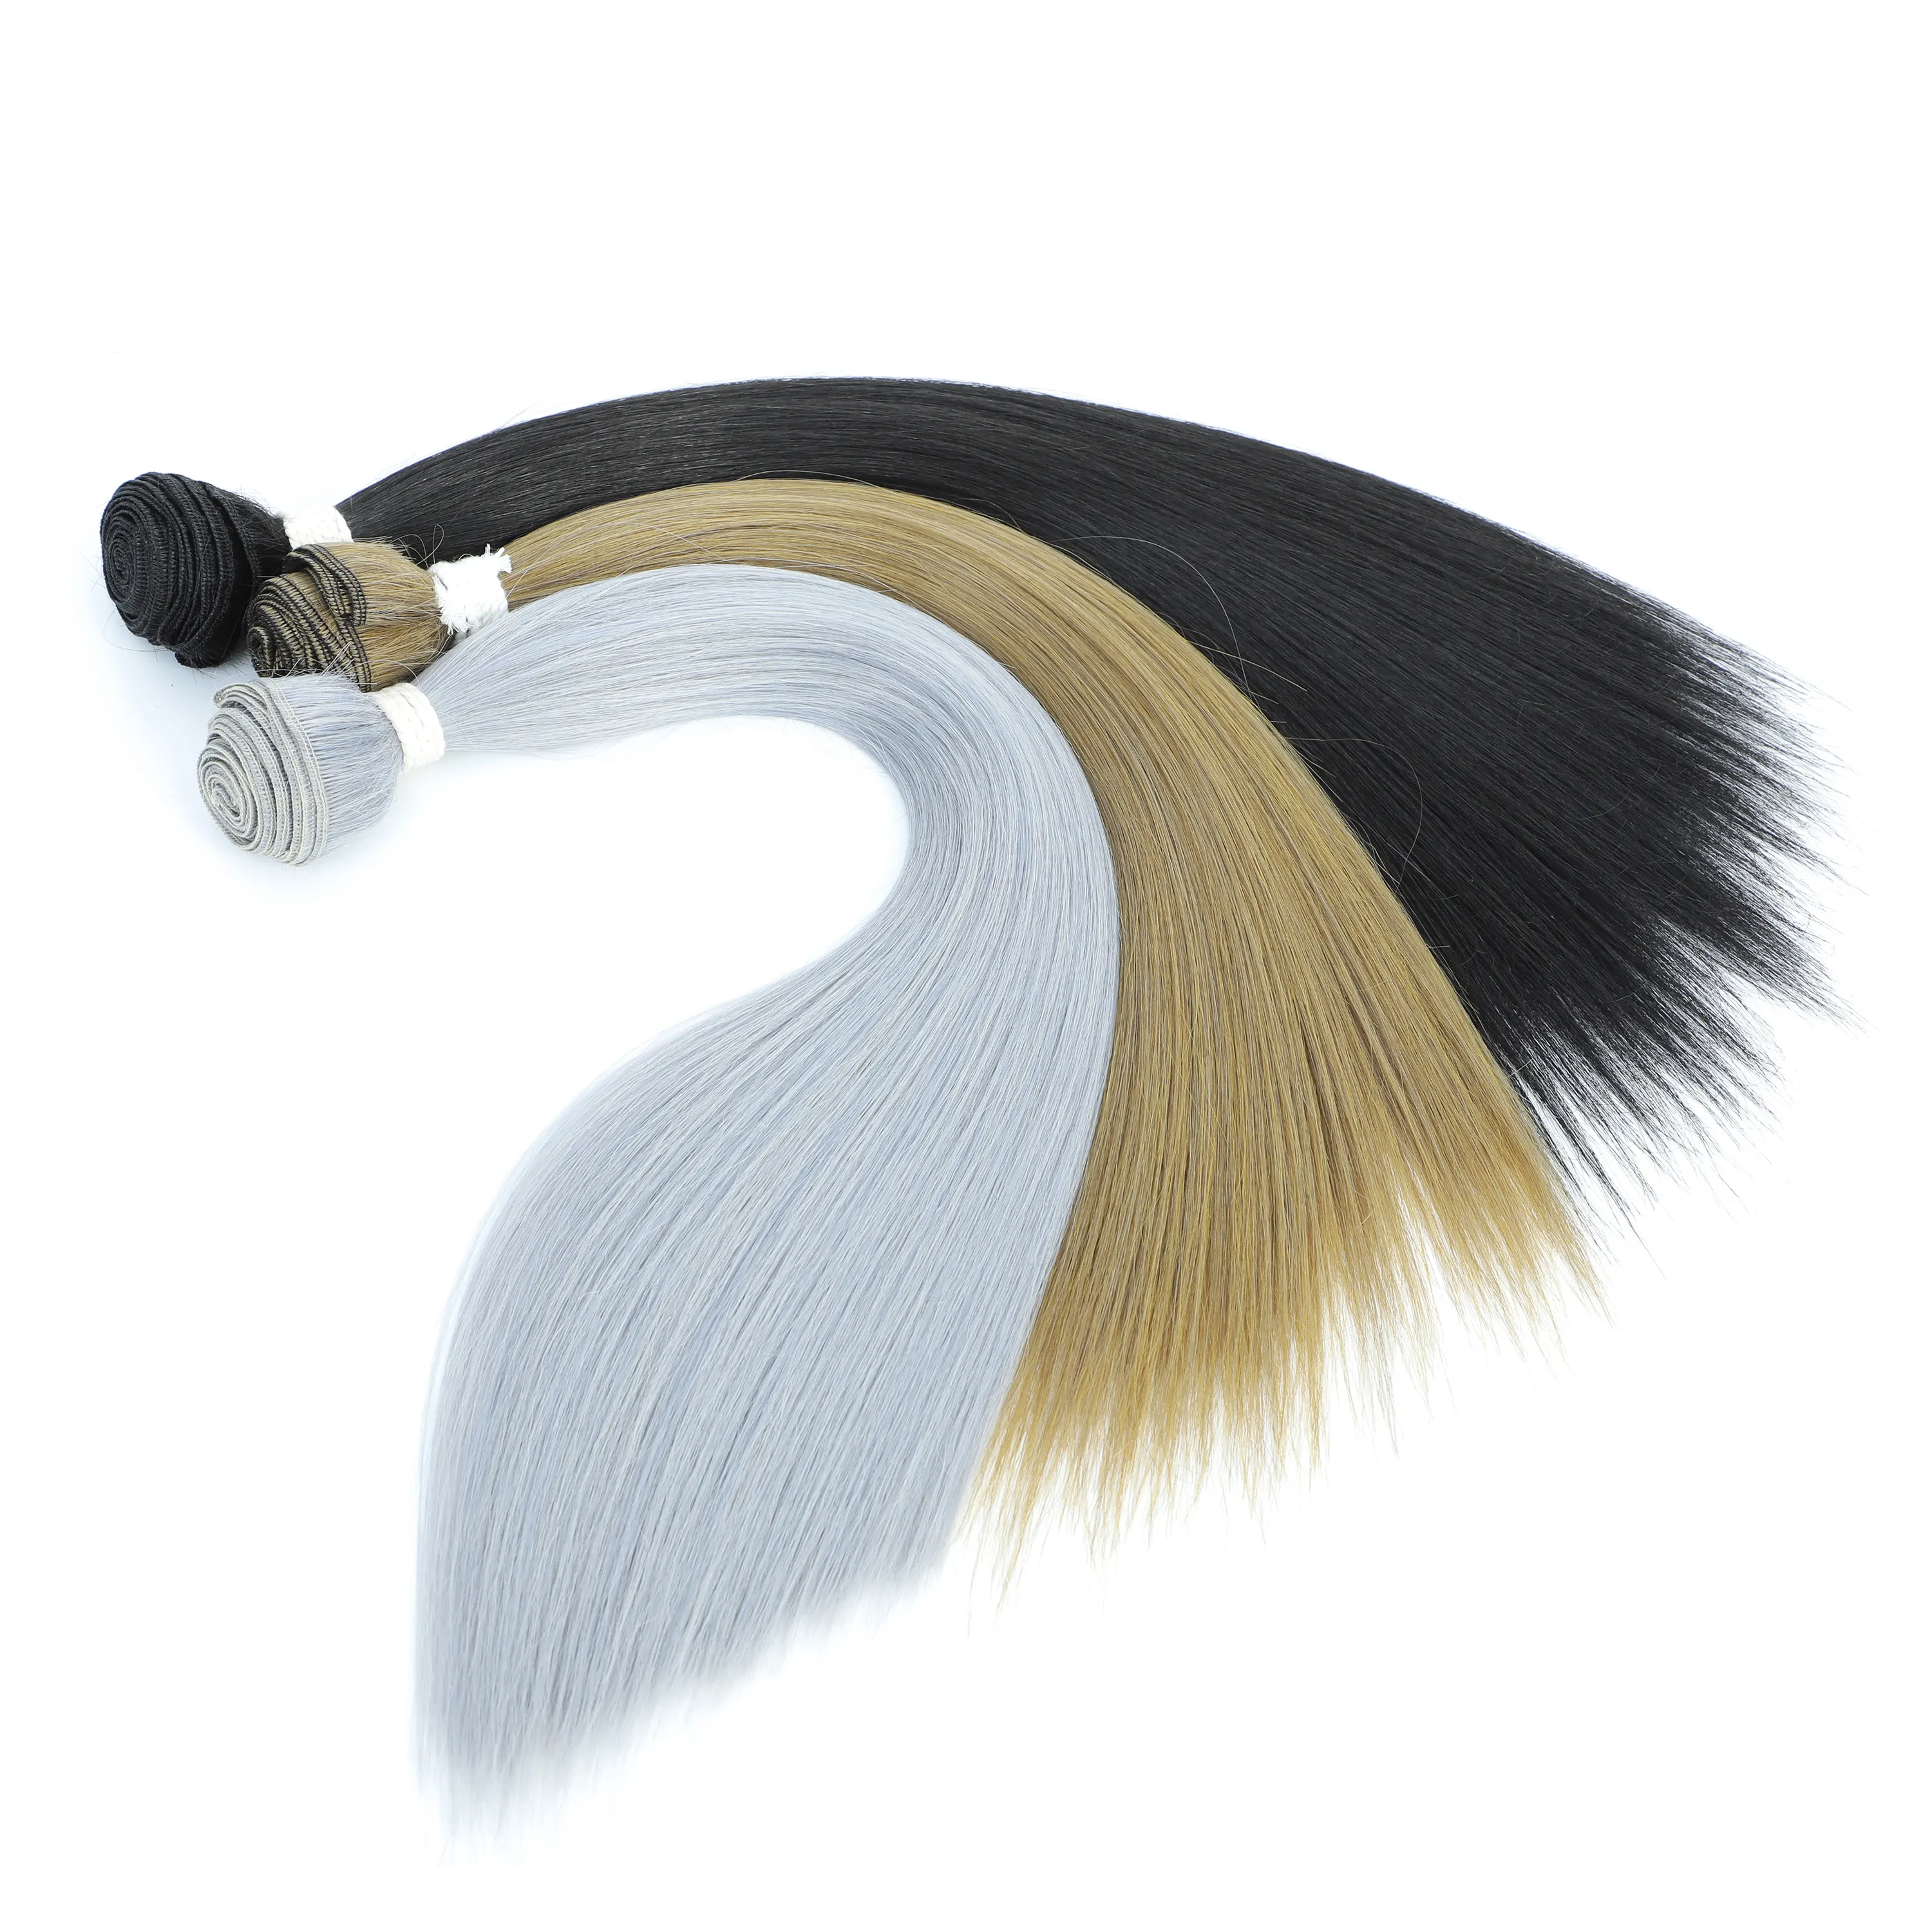 Bundel rambut lurus tulang Salon serat ekstensi rambut alami Super panjang sintetis rambut lurus Yaki penuh ke ujung